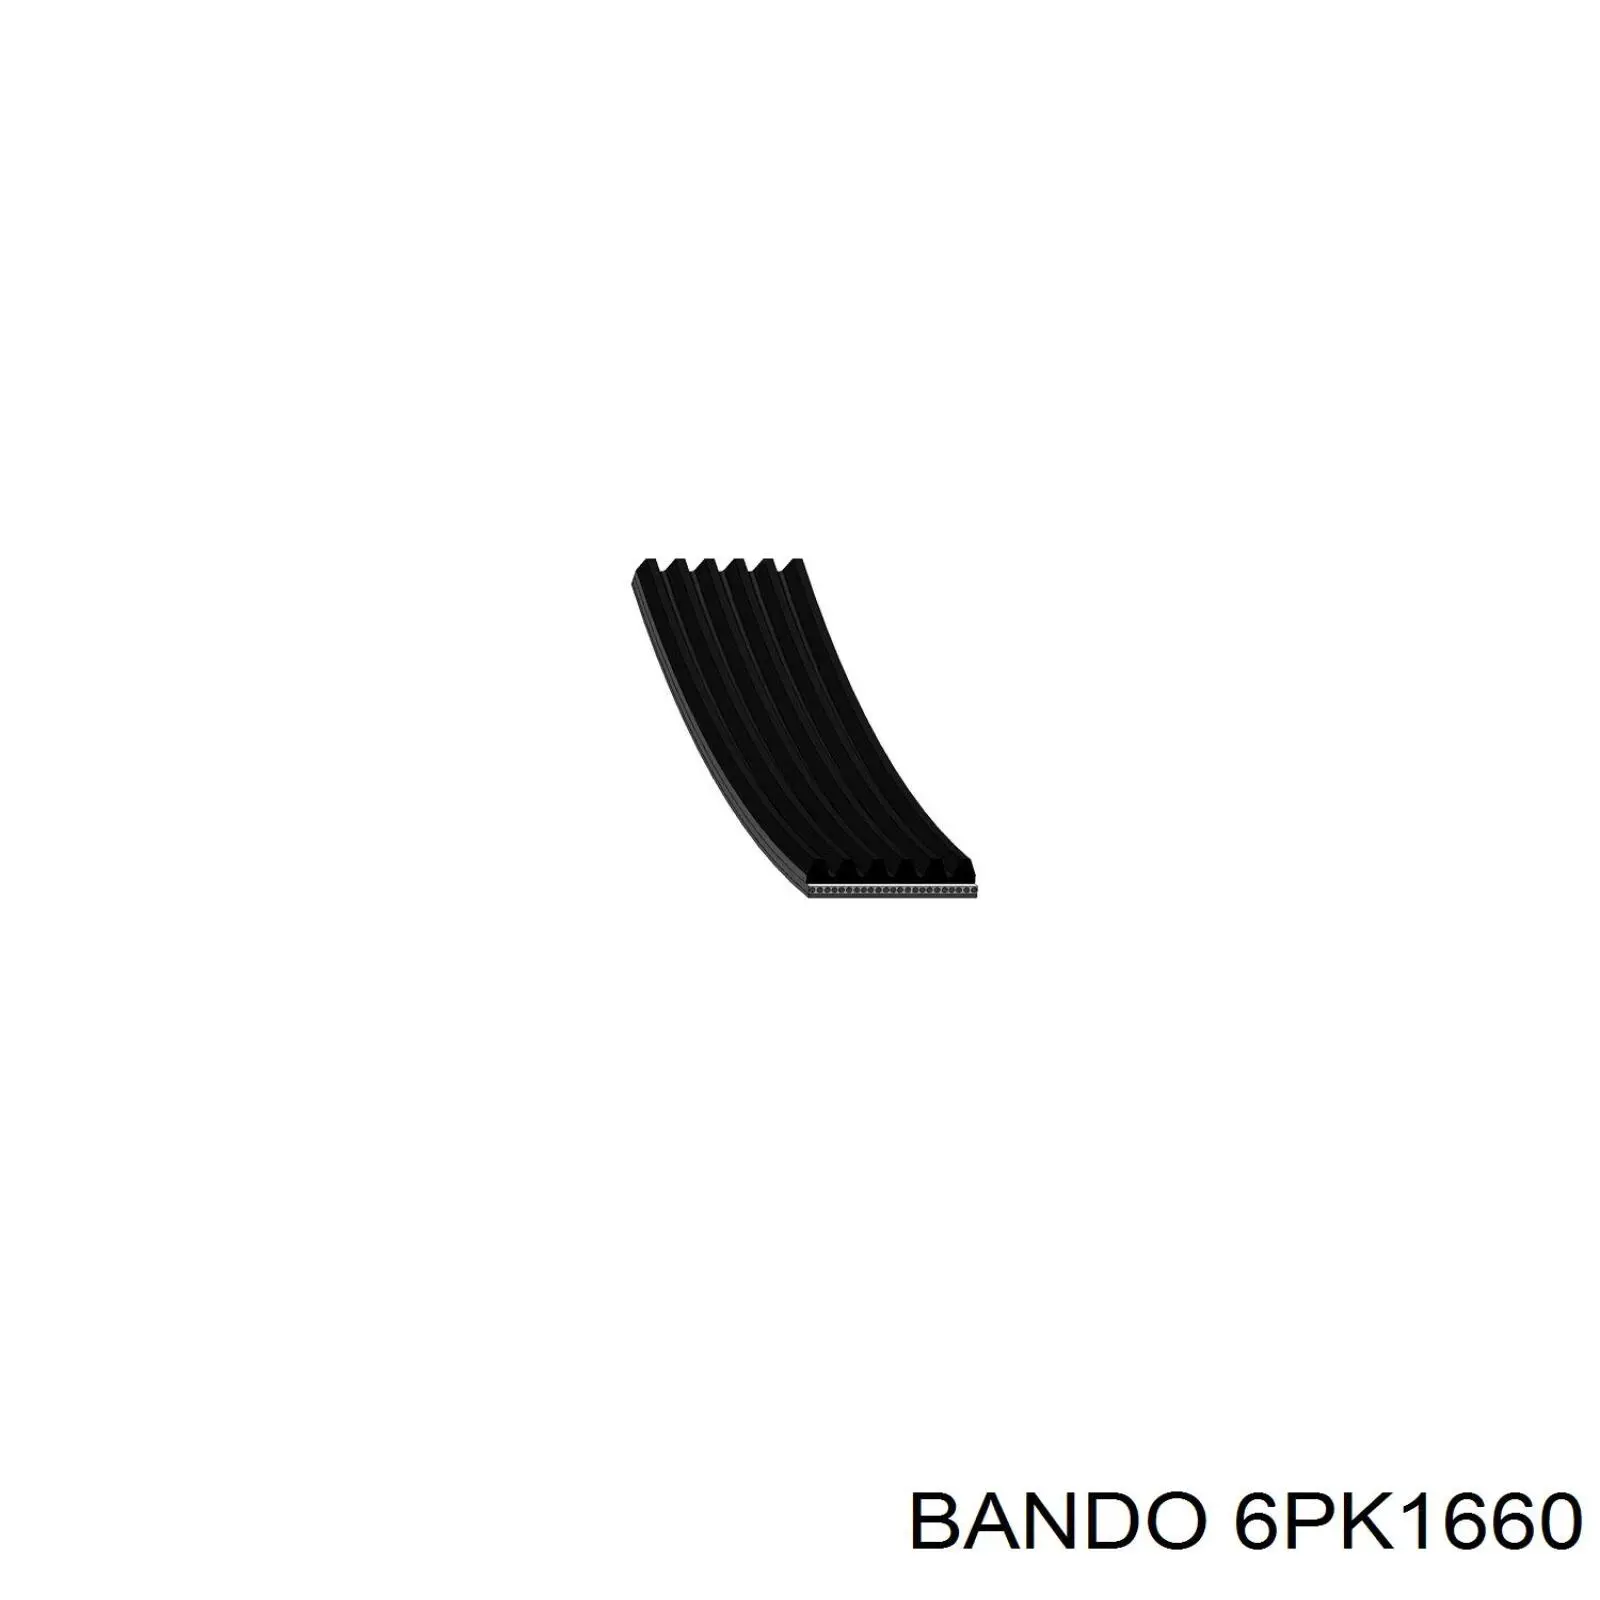 6PK1660 Bando correa trapezoidal